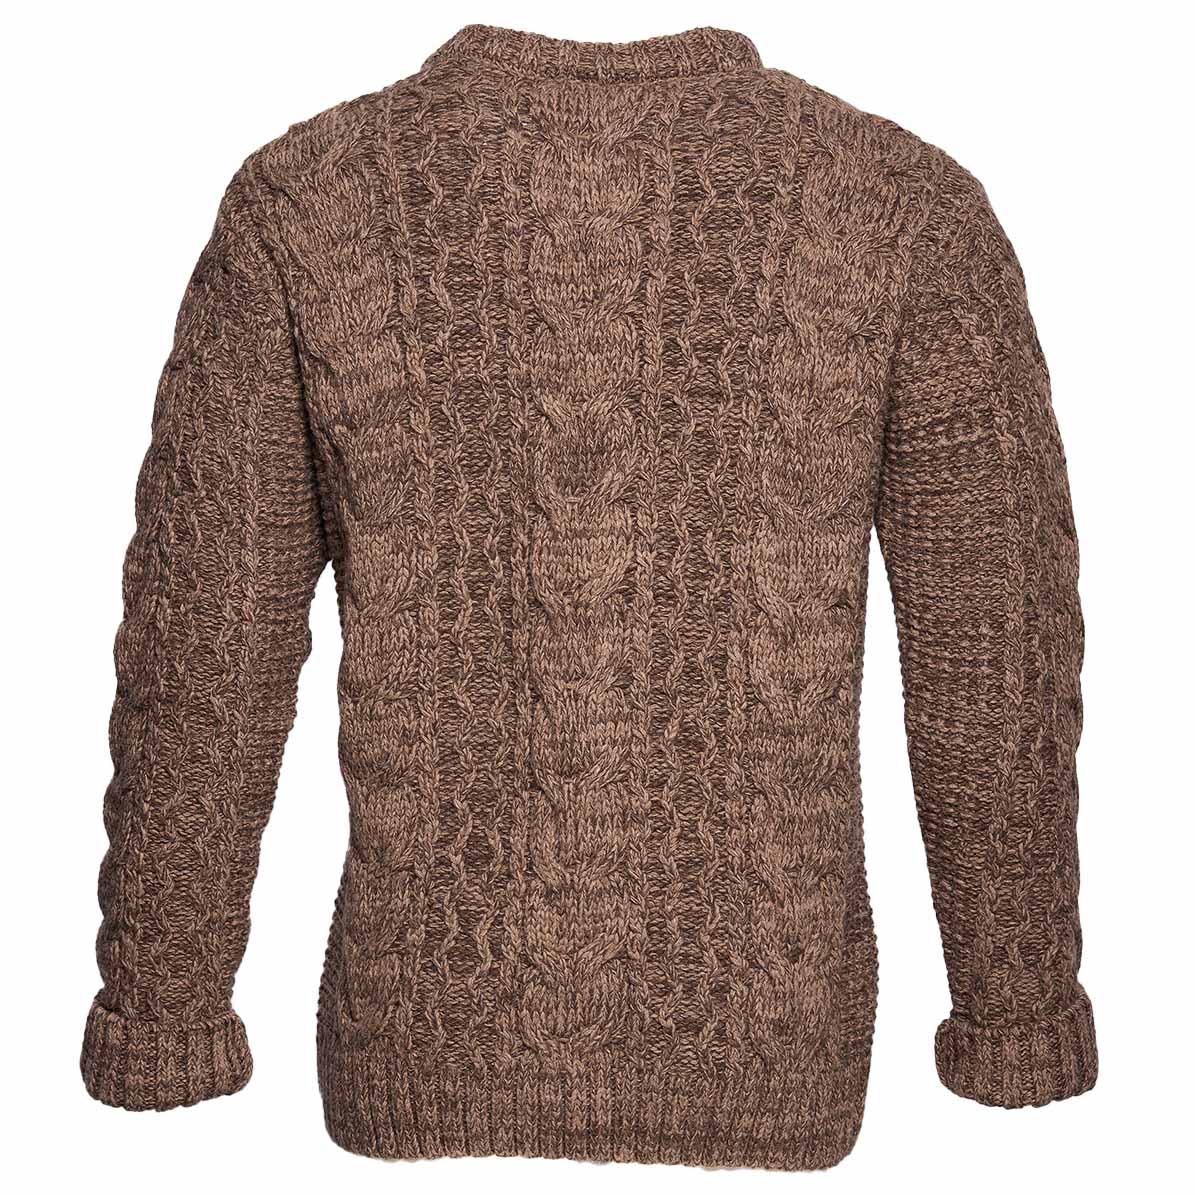 1946 Mountaineer Sweater brown melange